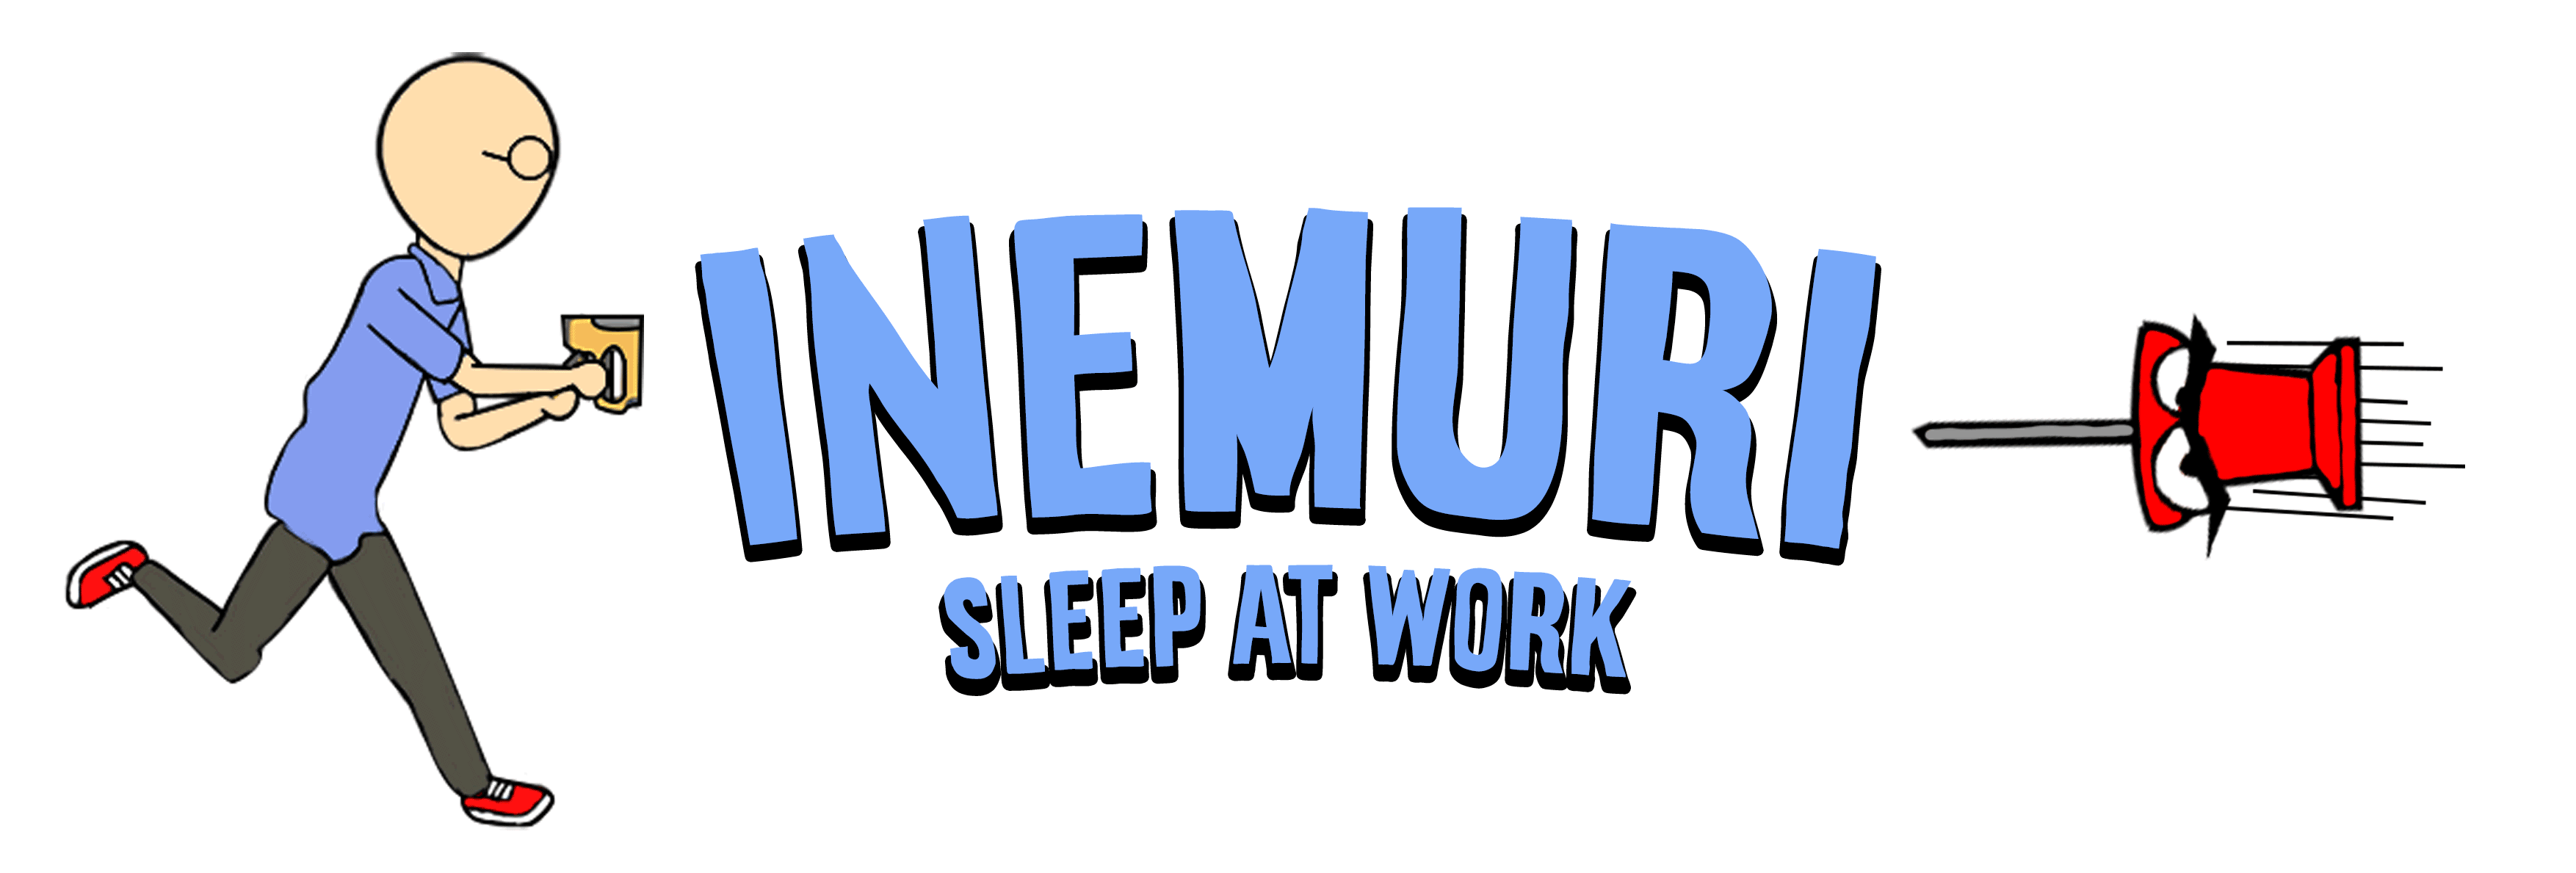 Inemuri: Sleep at Work